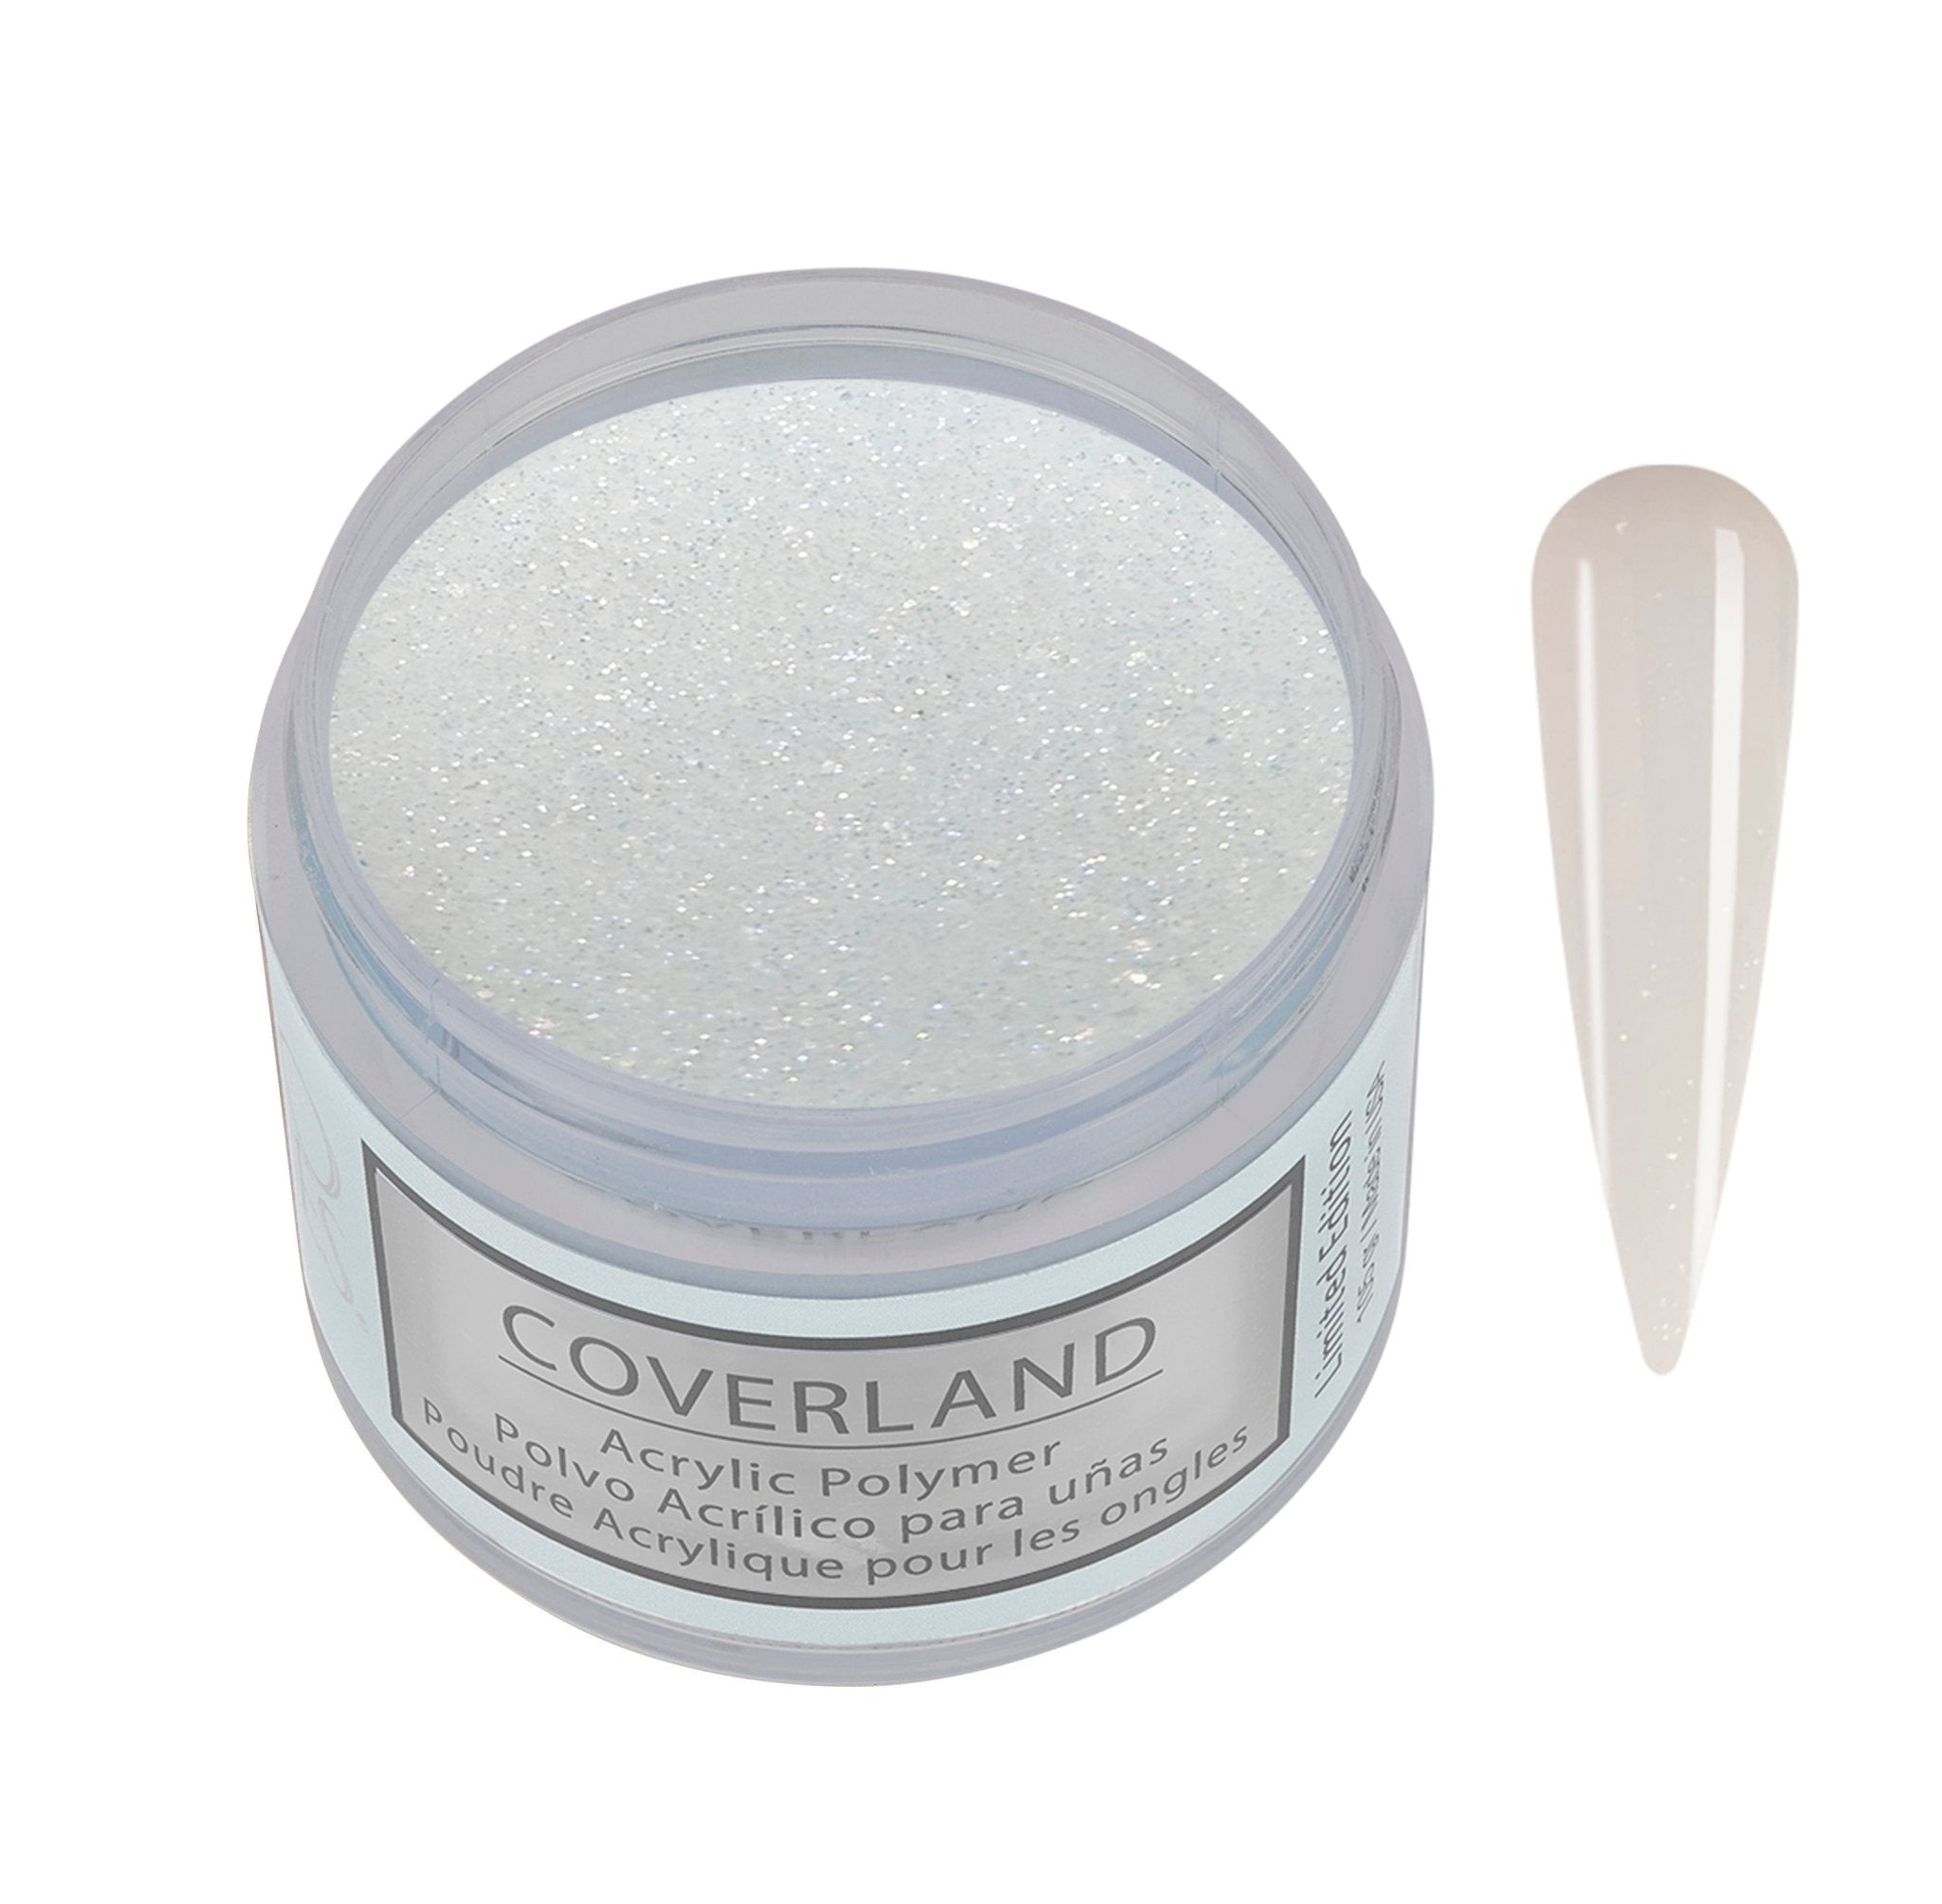 Coverland Acrylic Powder 3.5 oz 